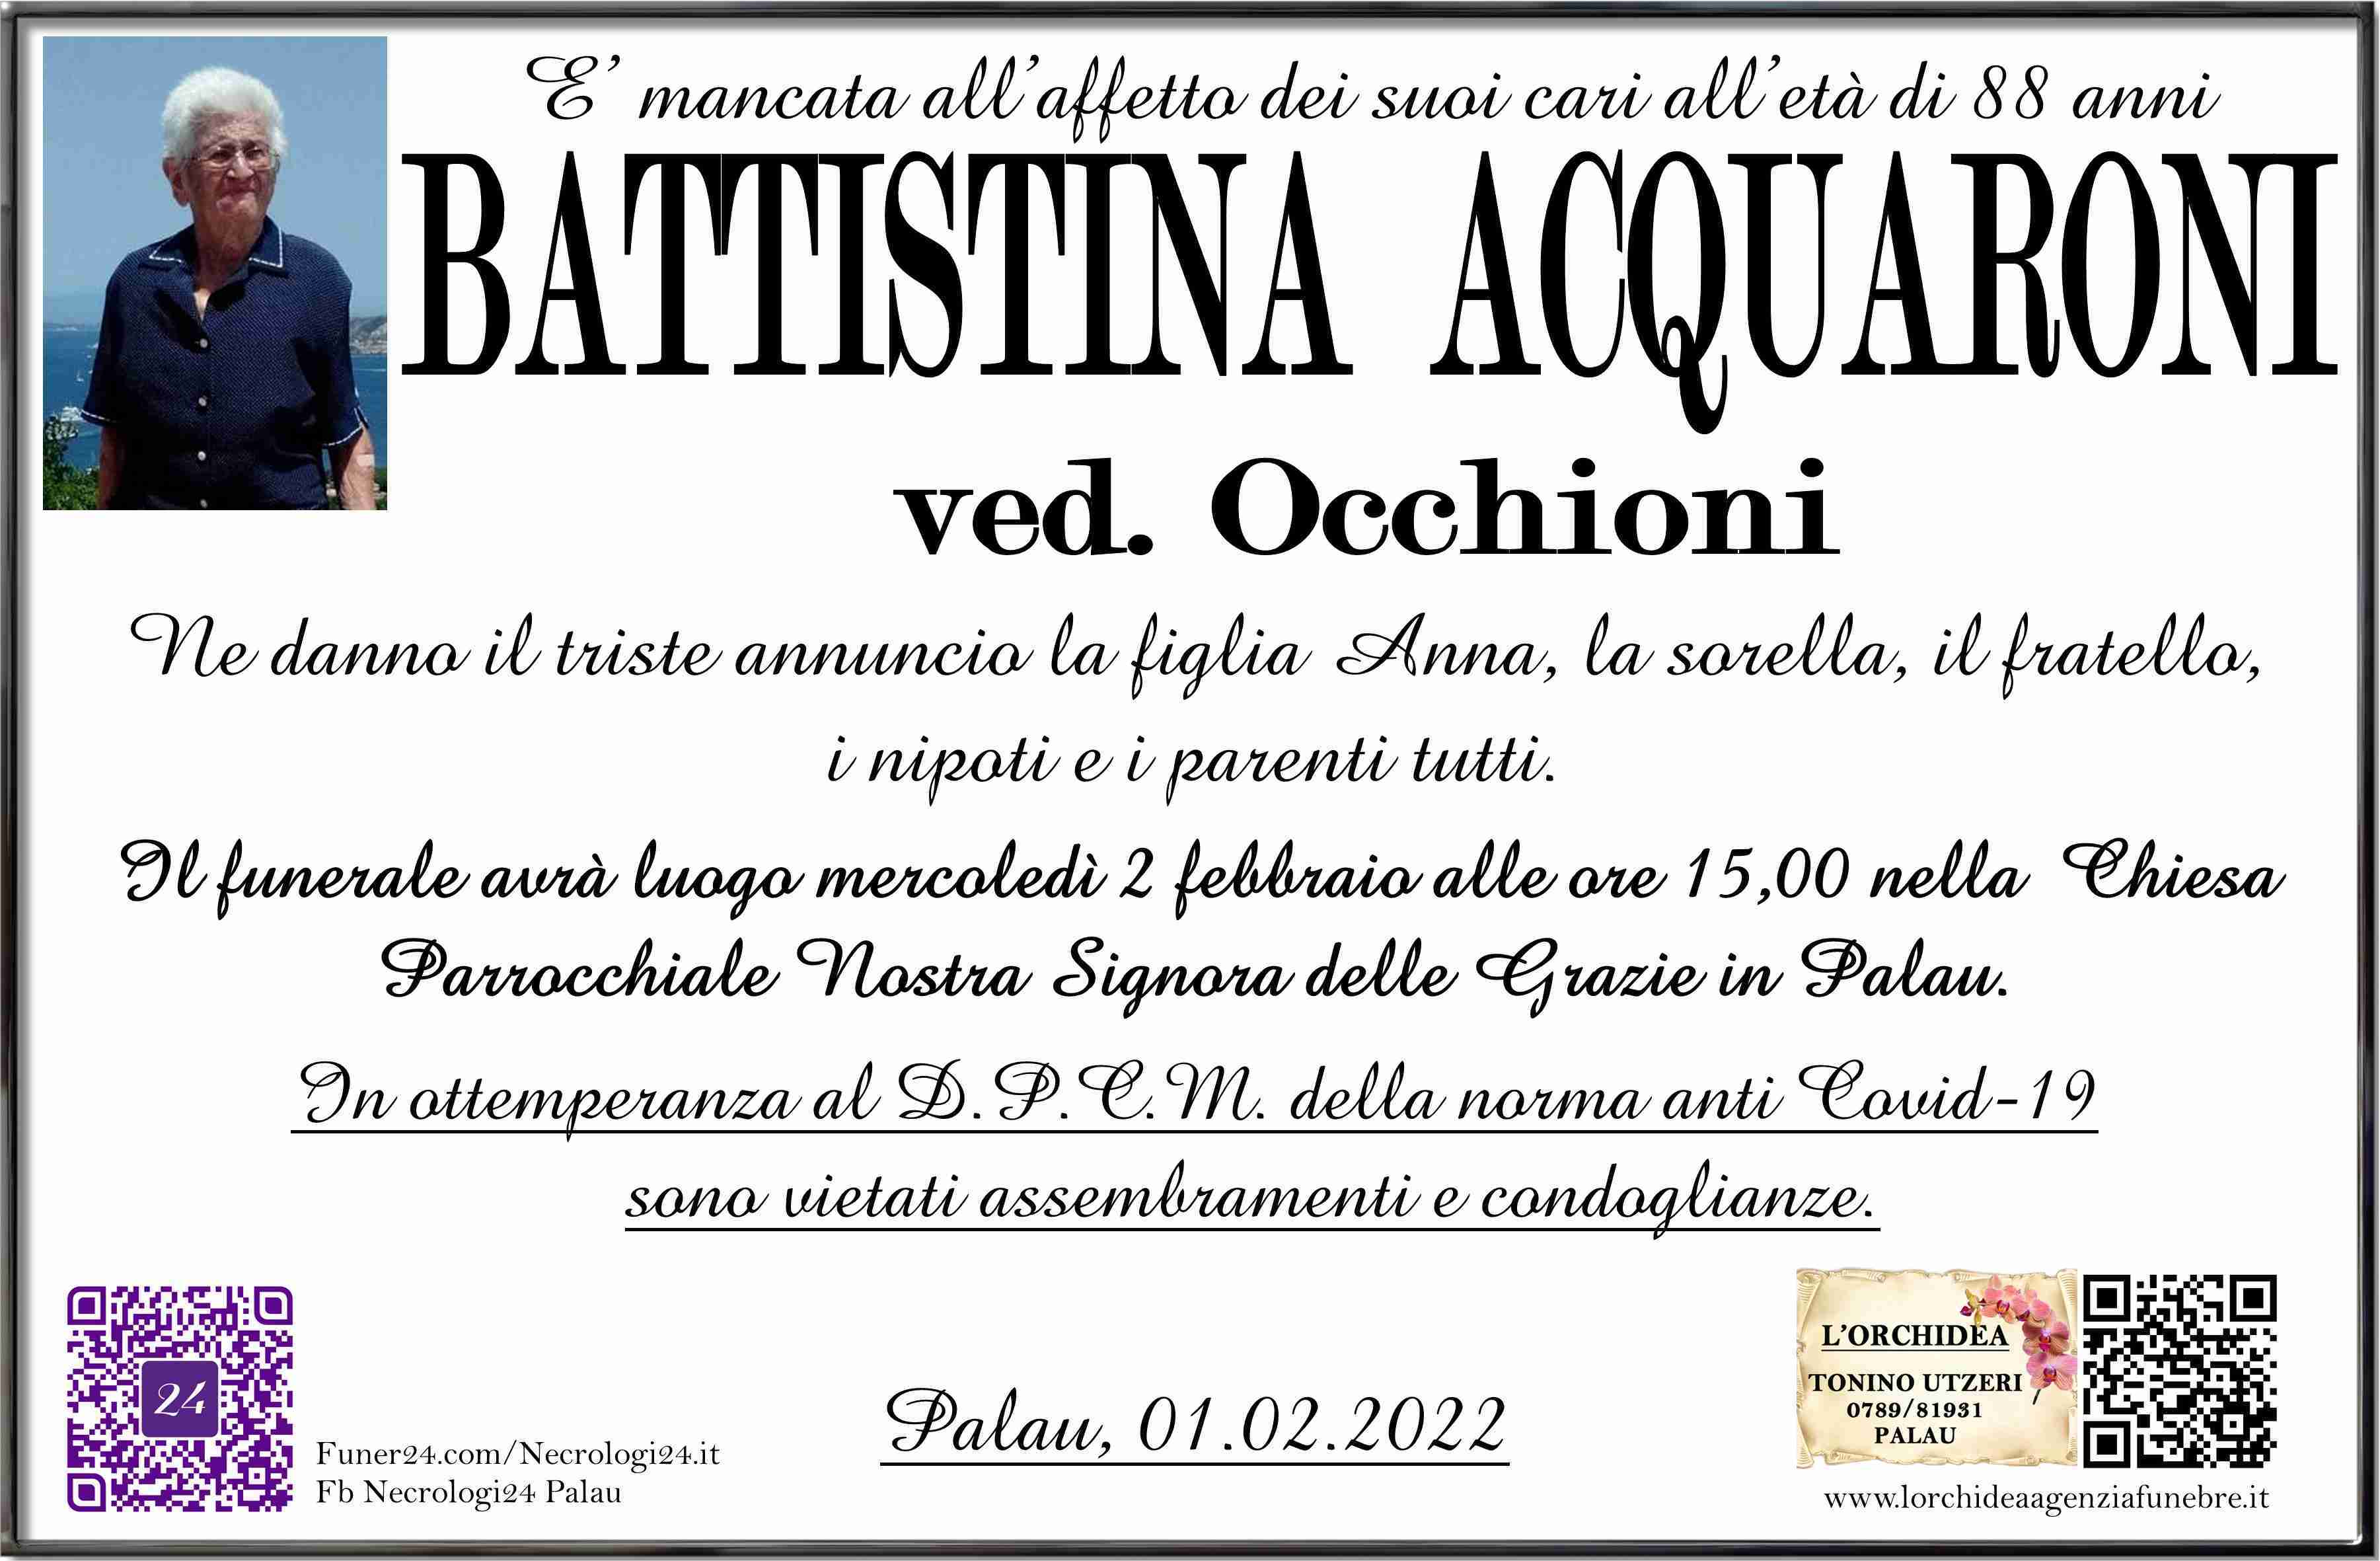 Battistina Acquaroni